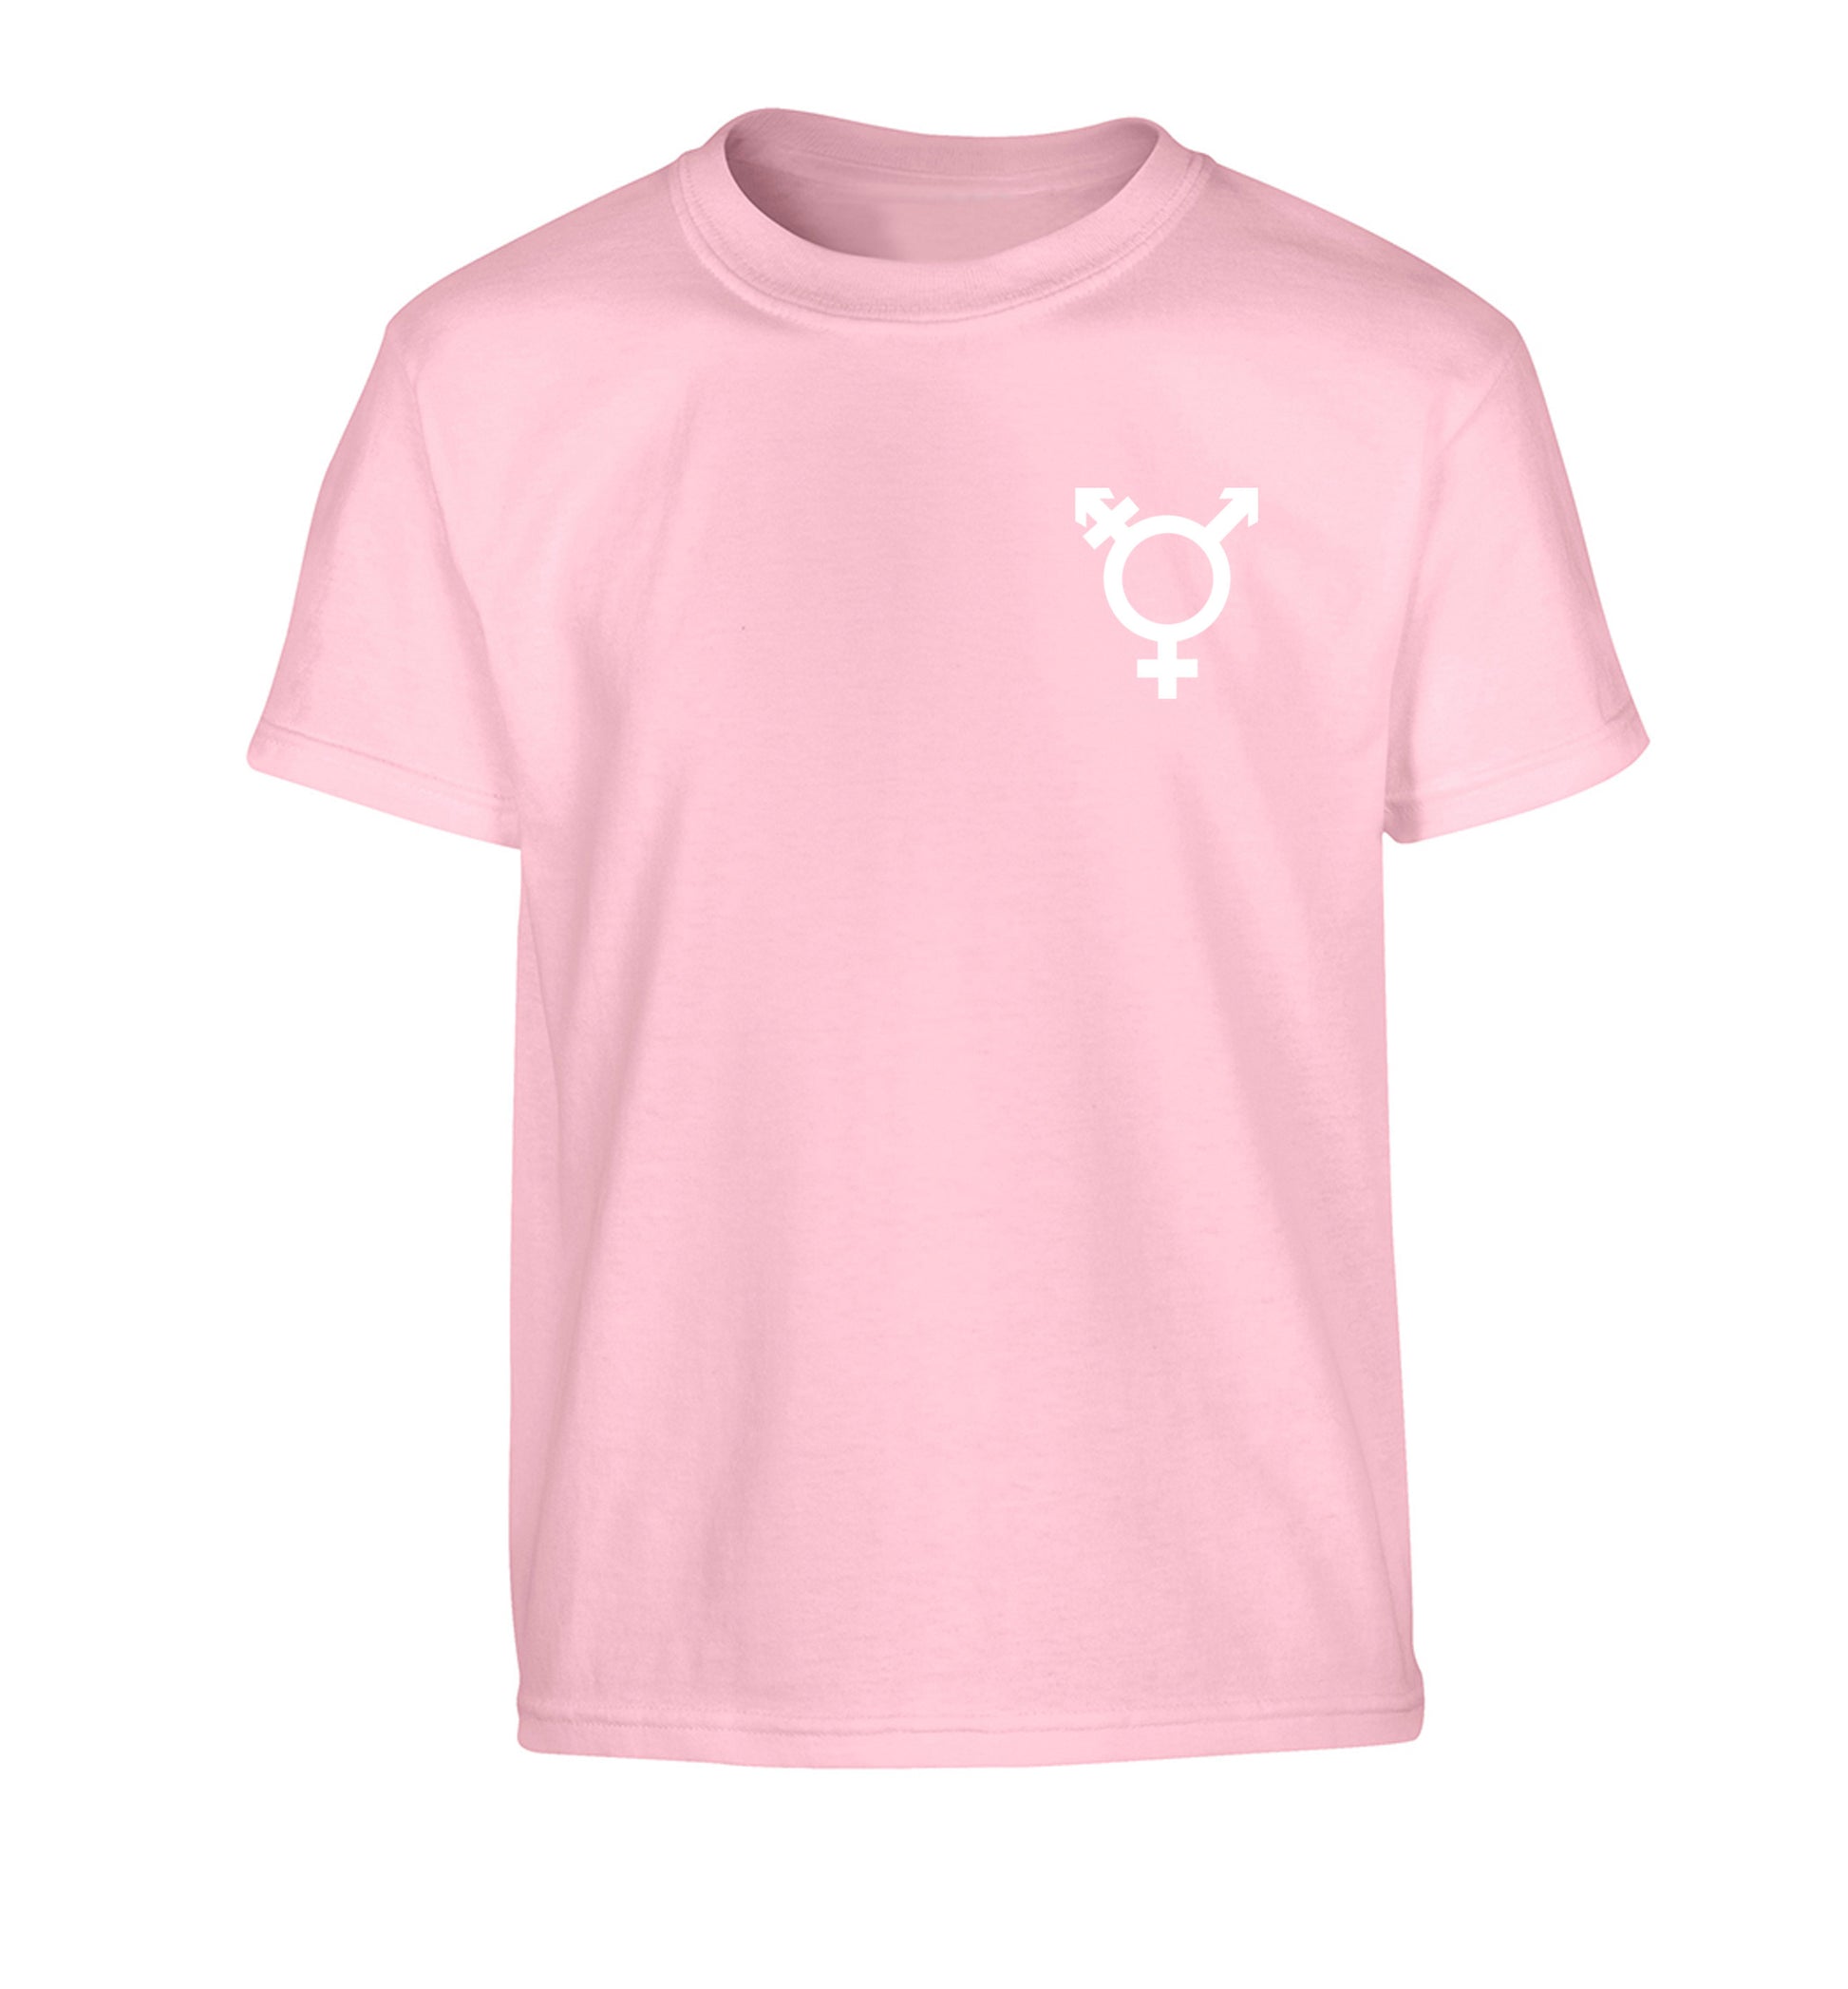 Trans gender symbol pocket Children's light pink Tshirt 12-14 Years